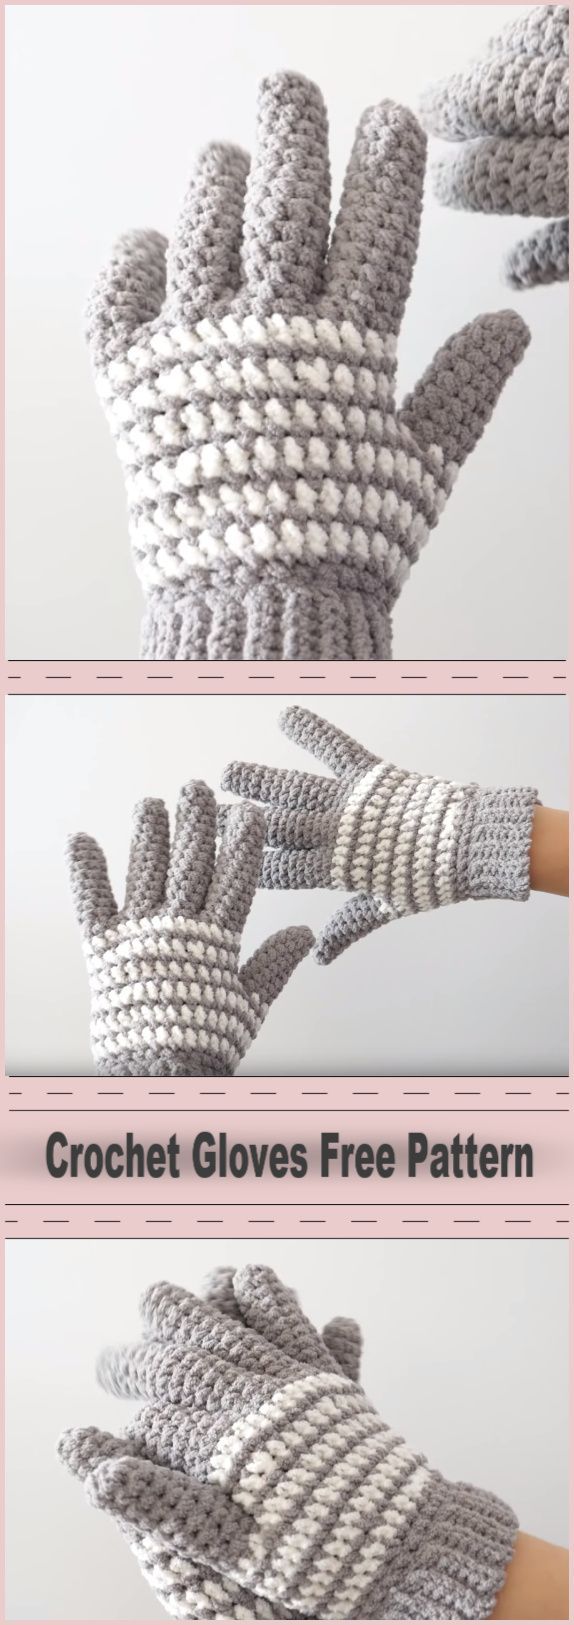 Crochet-Gloves-Free-Pattern-Things-To-Crochet.jpg